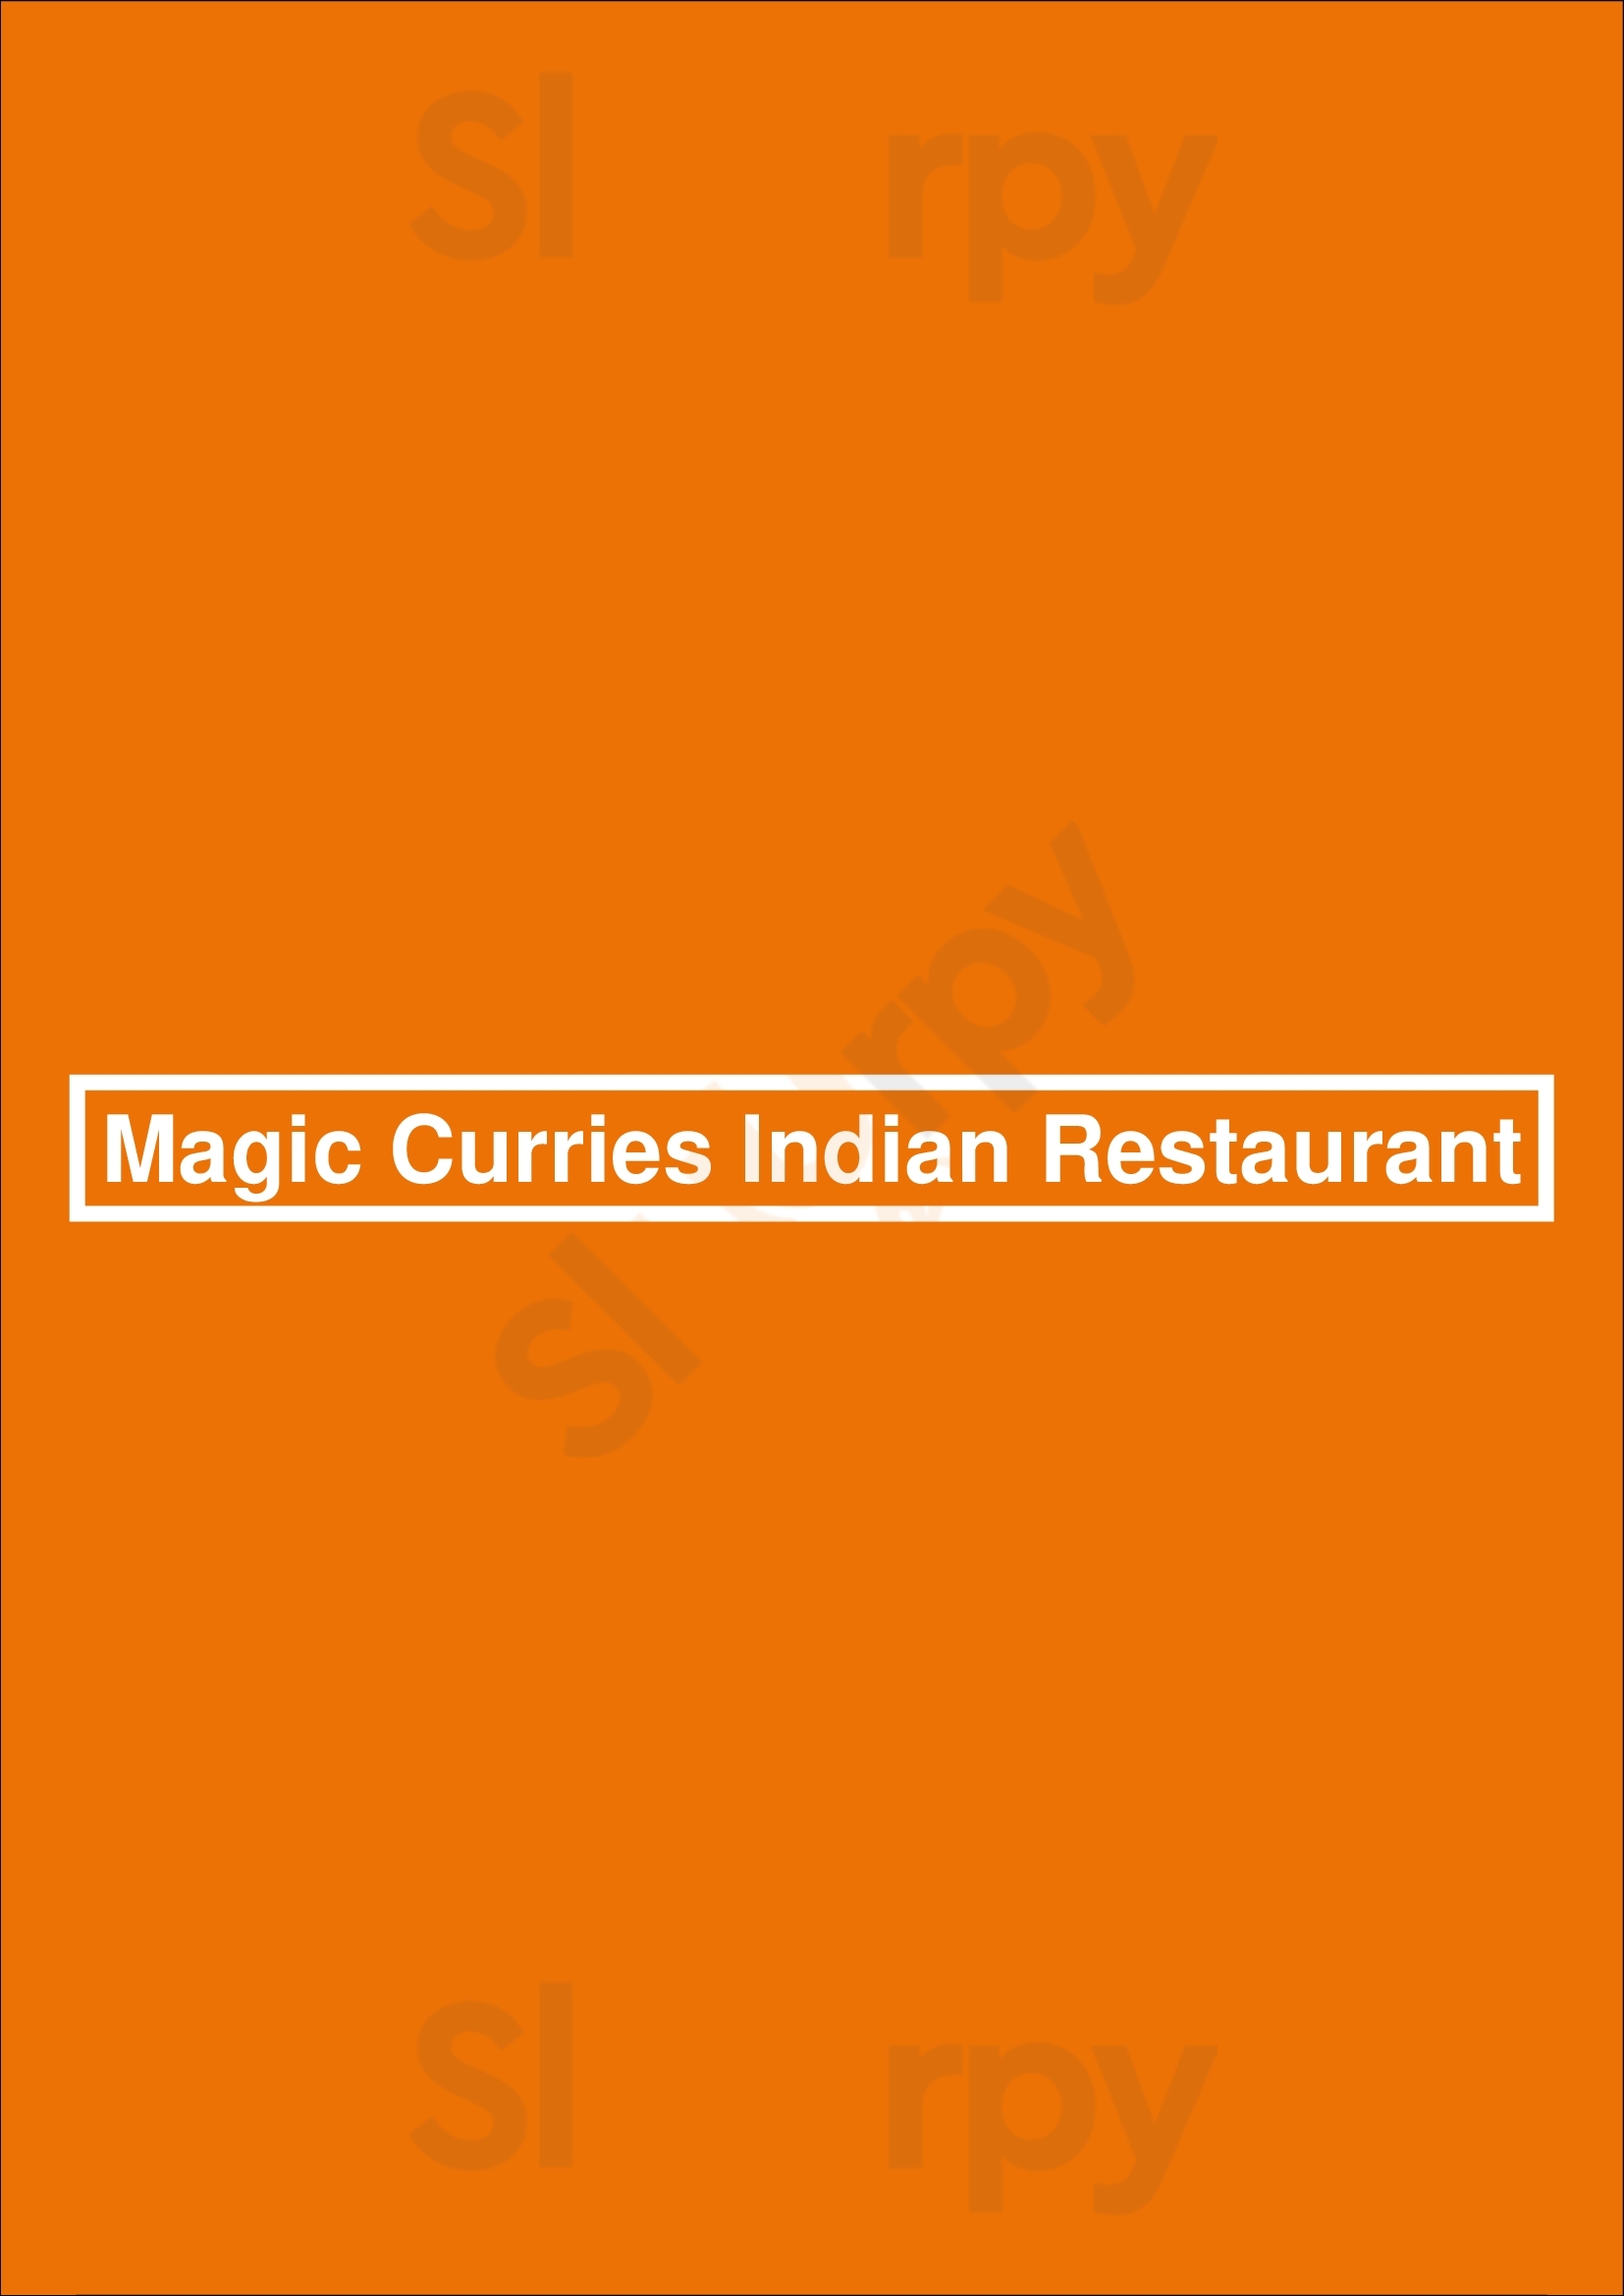 Magic Curries Indian Restaurant Hobart Menu - 1